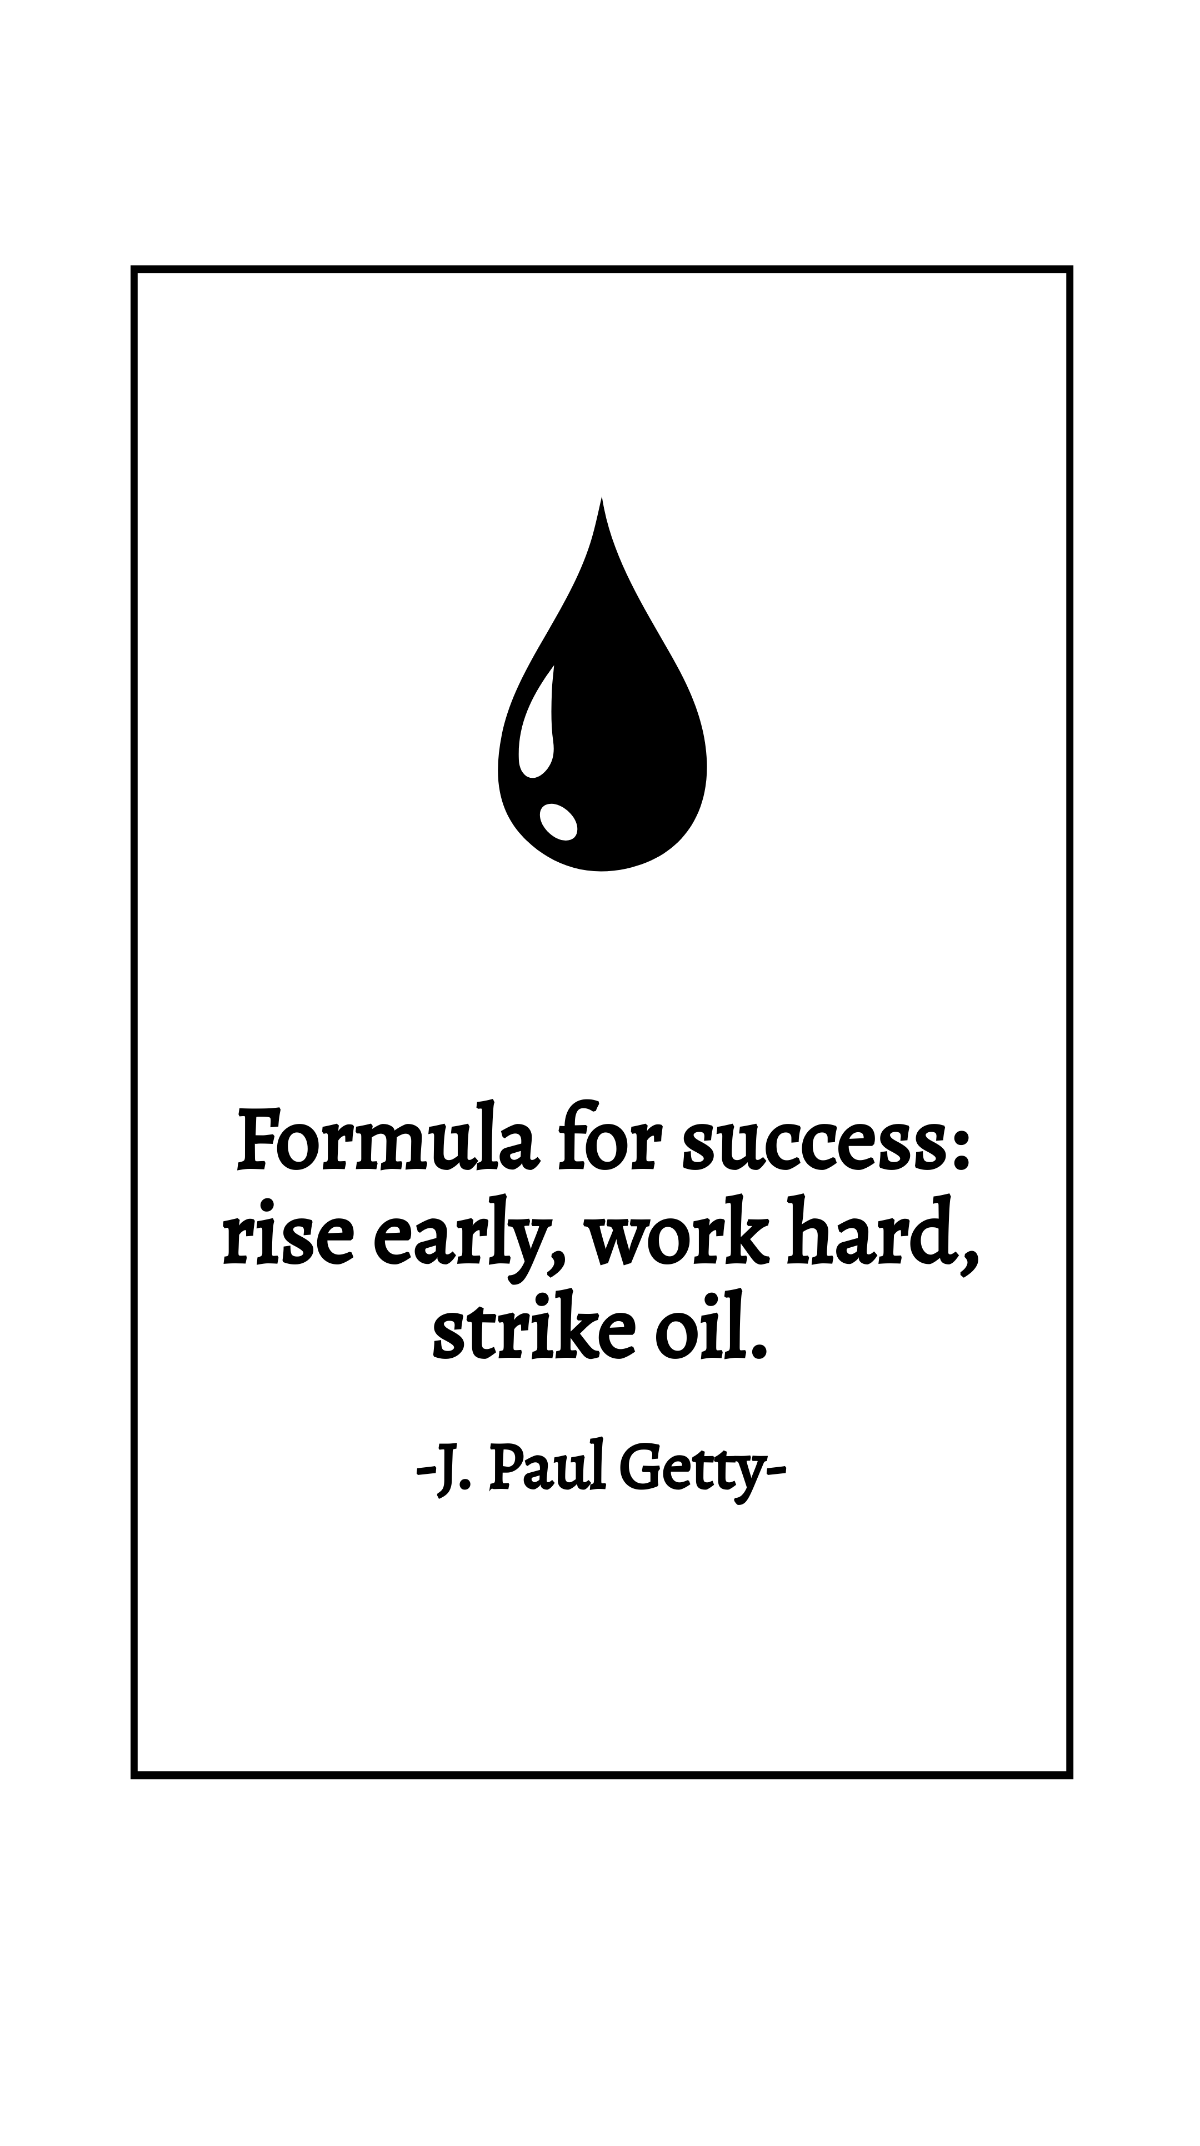 J. Paul Getty - Formula for success: rise early, work hard, strike oil.